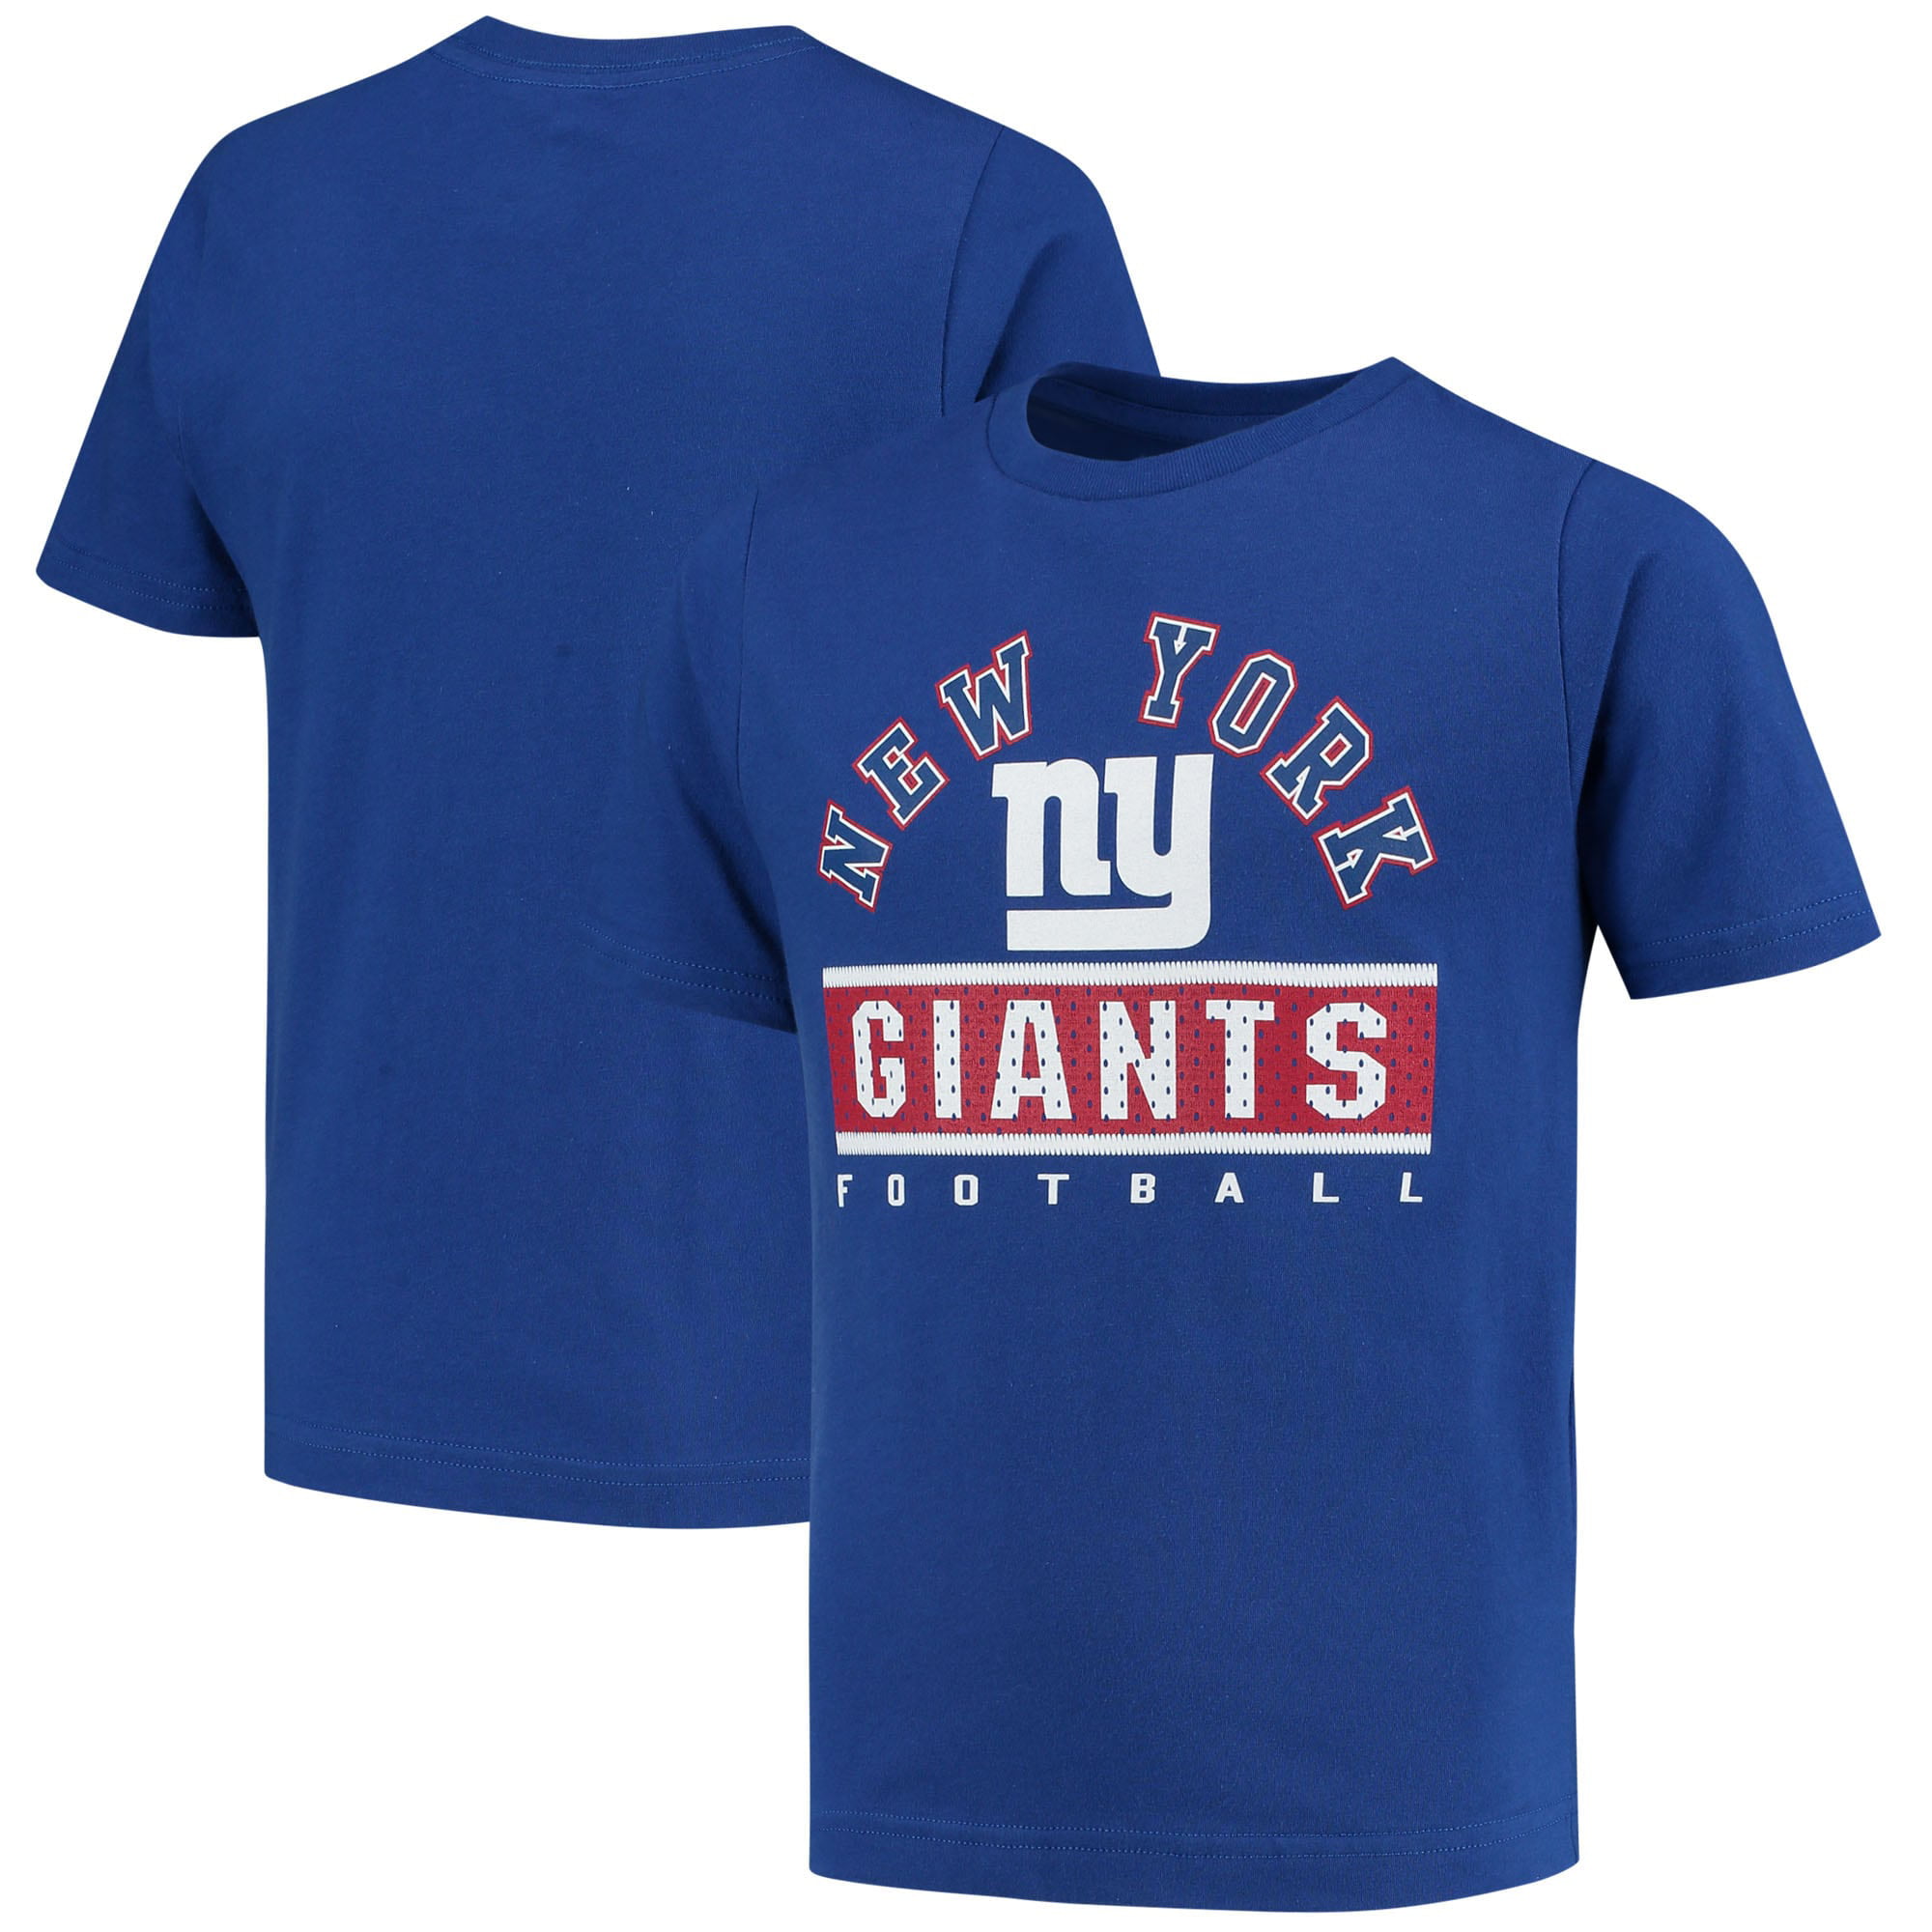 giants shirts for kids